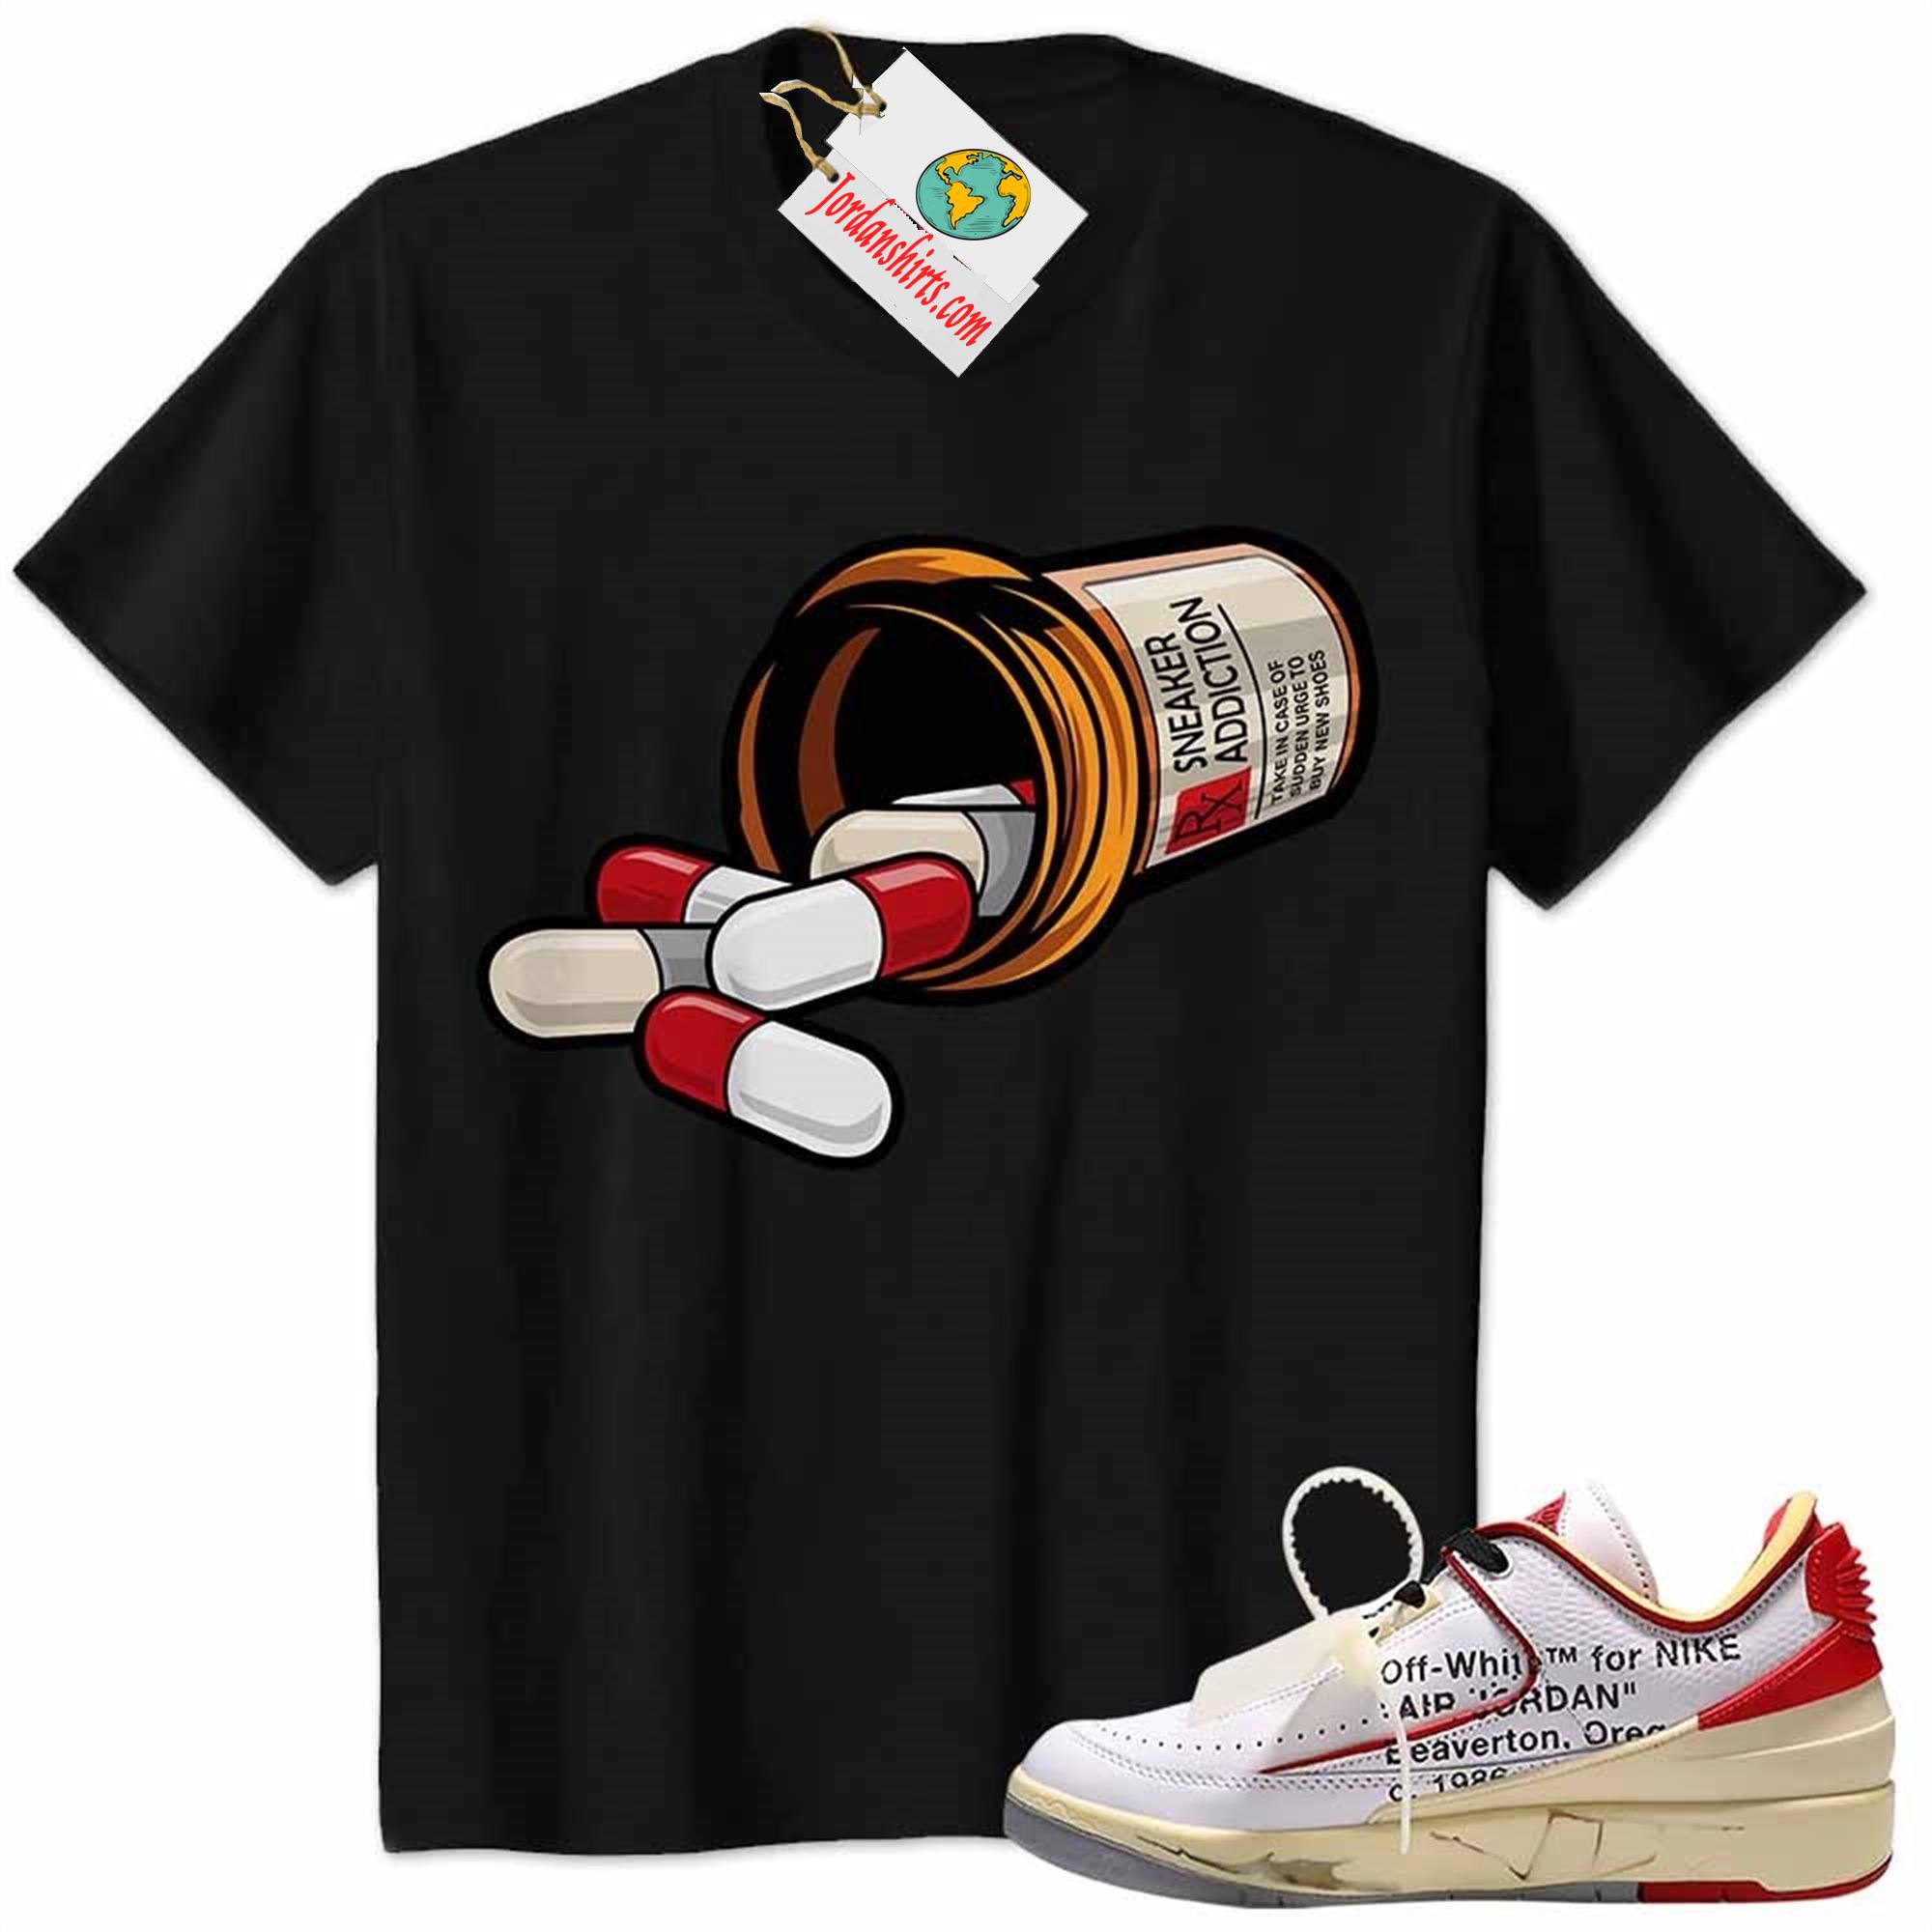 Jordan 2 Shirt, Rx Drugs Pill Bottle Sneaker Addiction Black Air Jordan 2 Low White Red Off-white 2s Size Up To 5xl